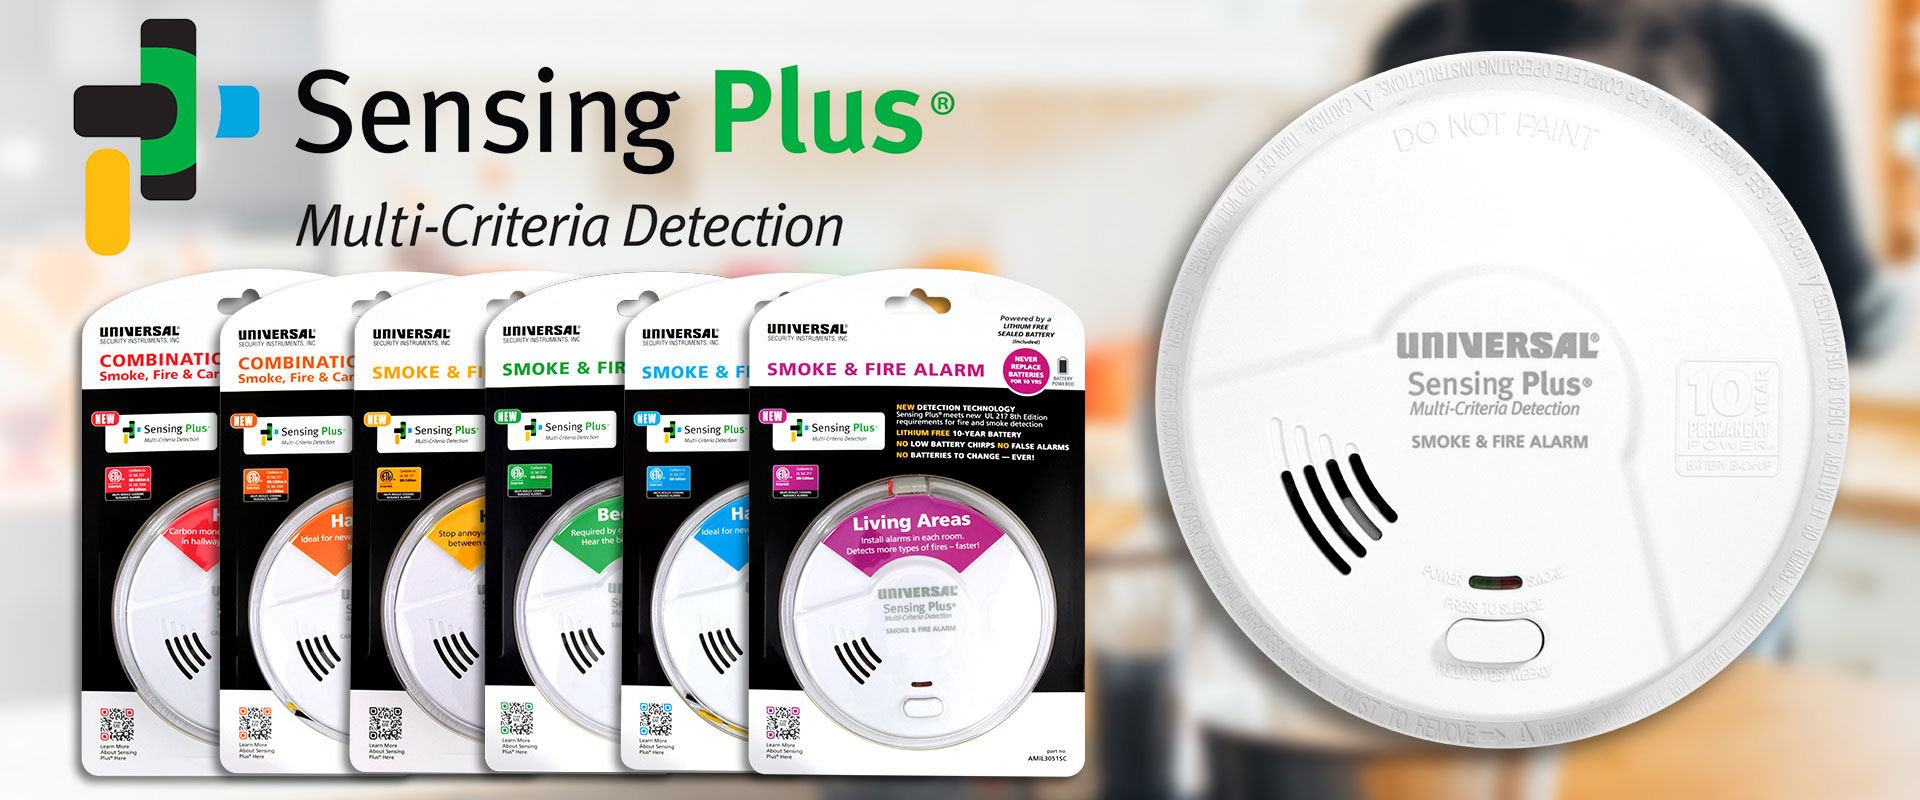 Sensing plus smoke alarms - new ul 217 standard edition compliant